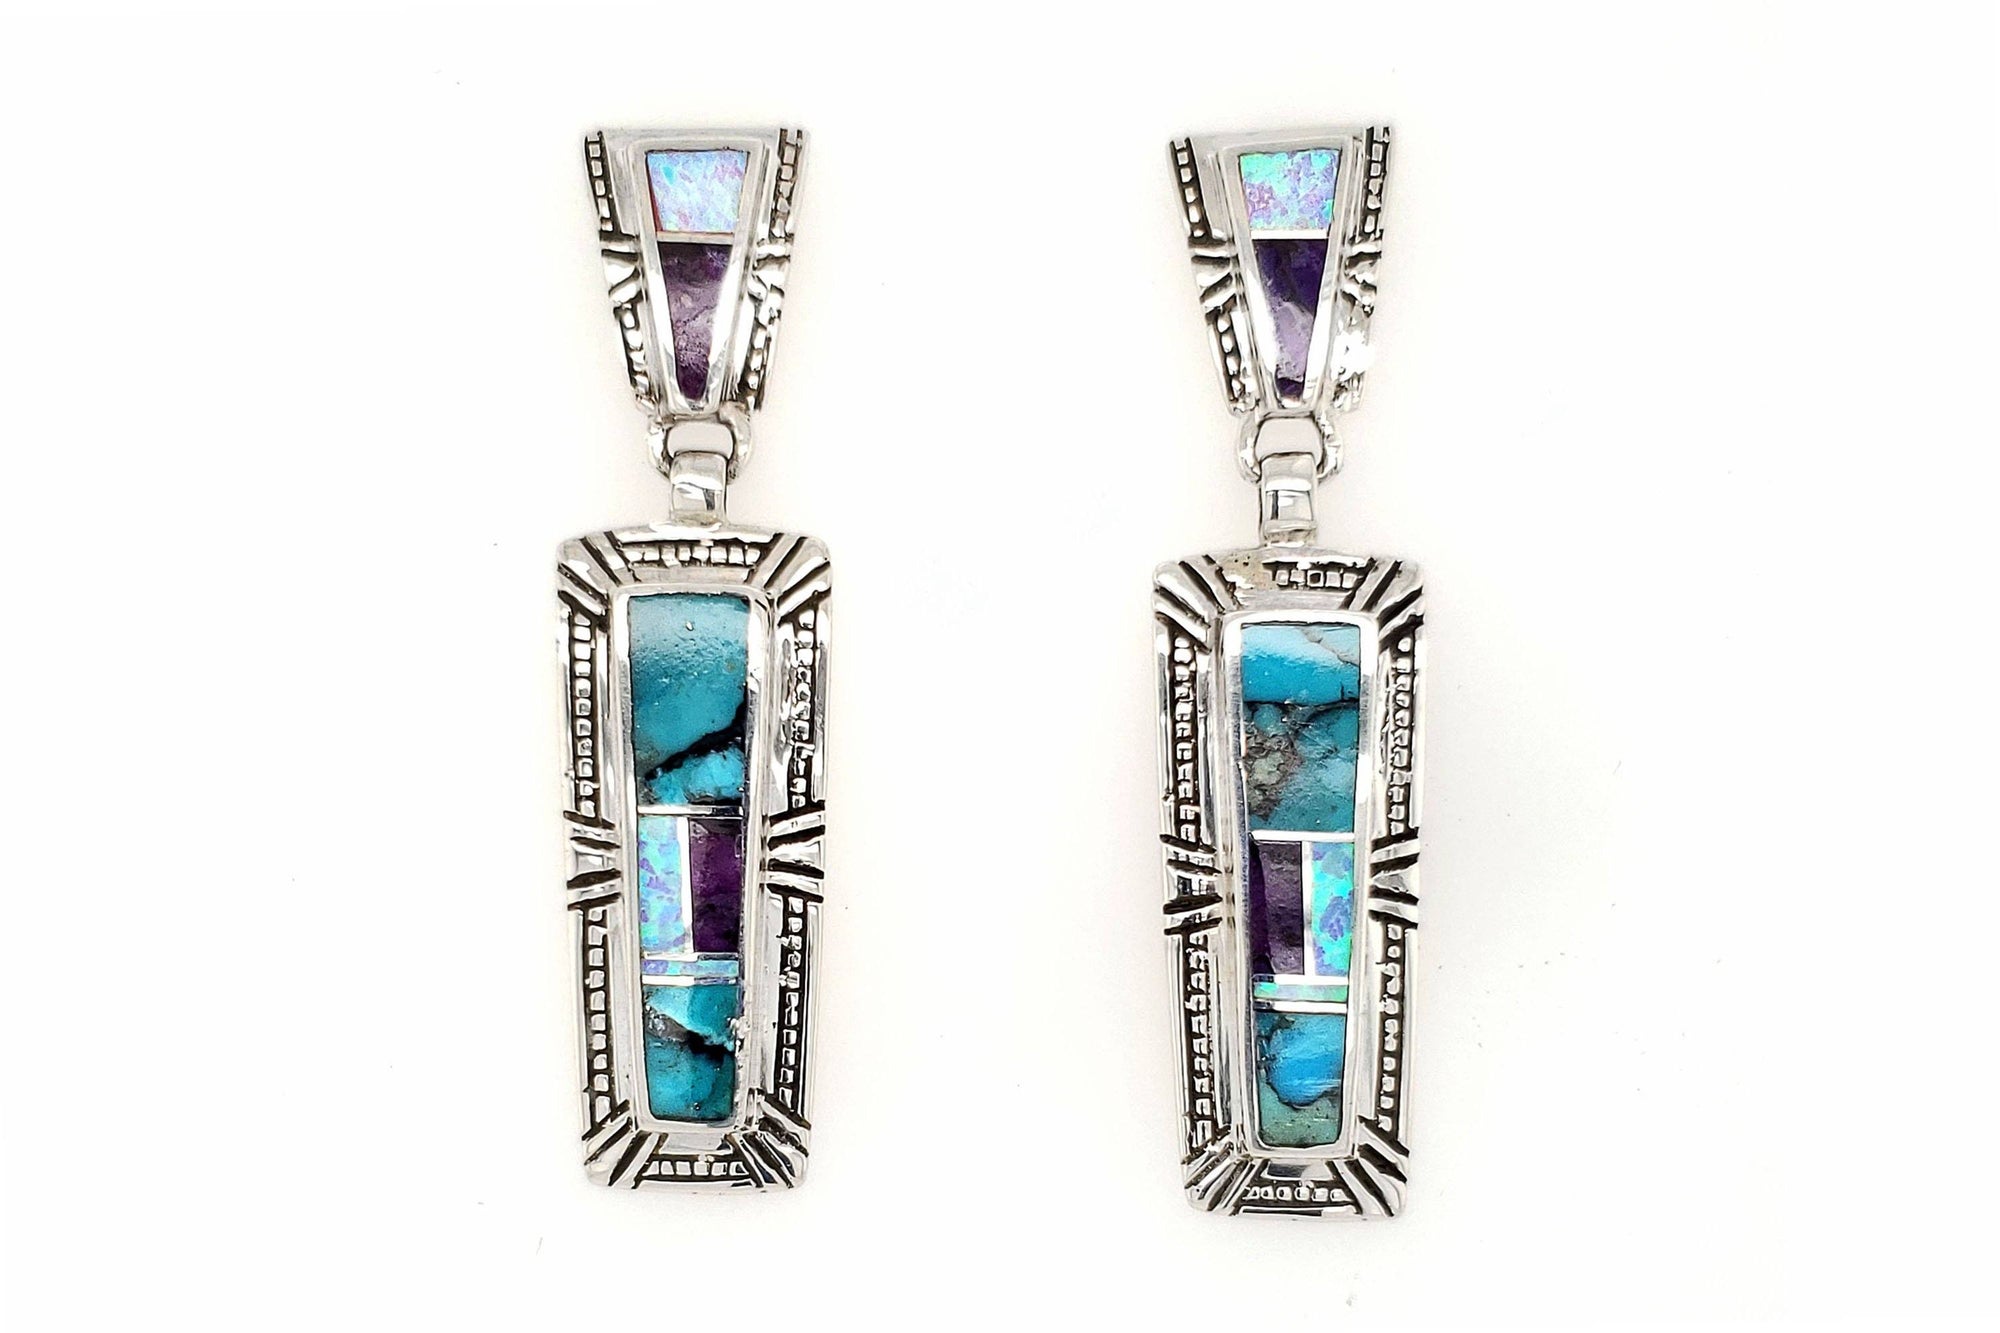 Beautiful Shalako Earrings by David Rosales - Turquoise Jewelry